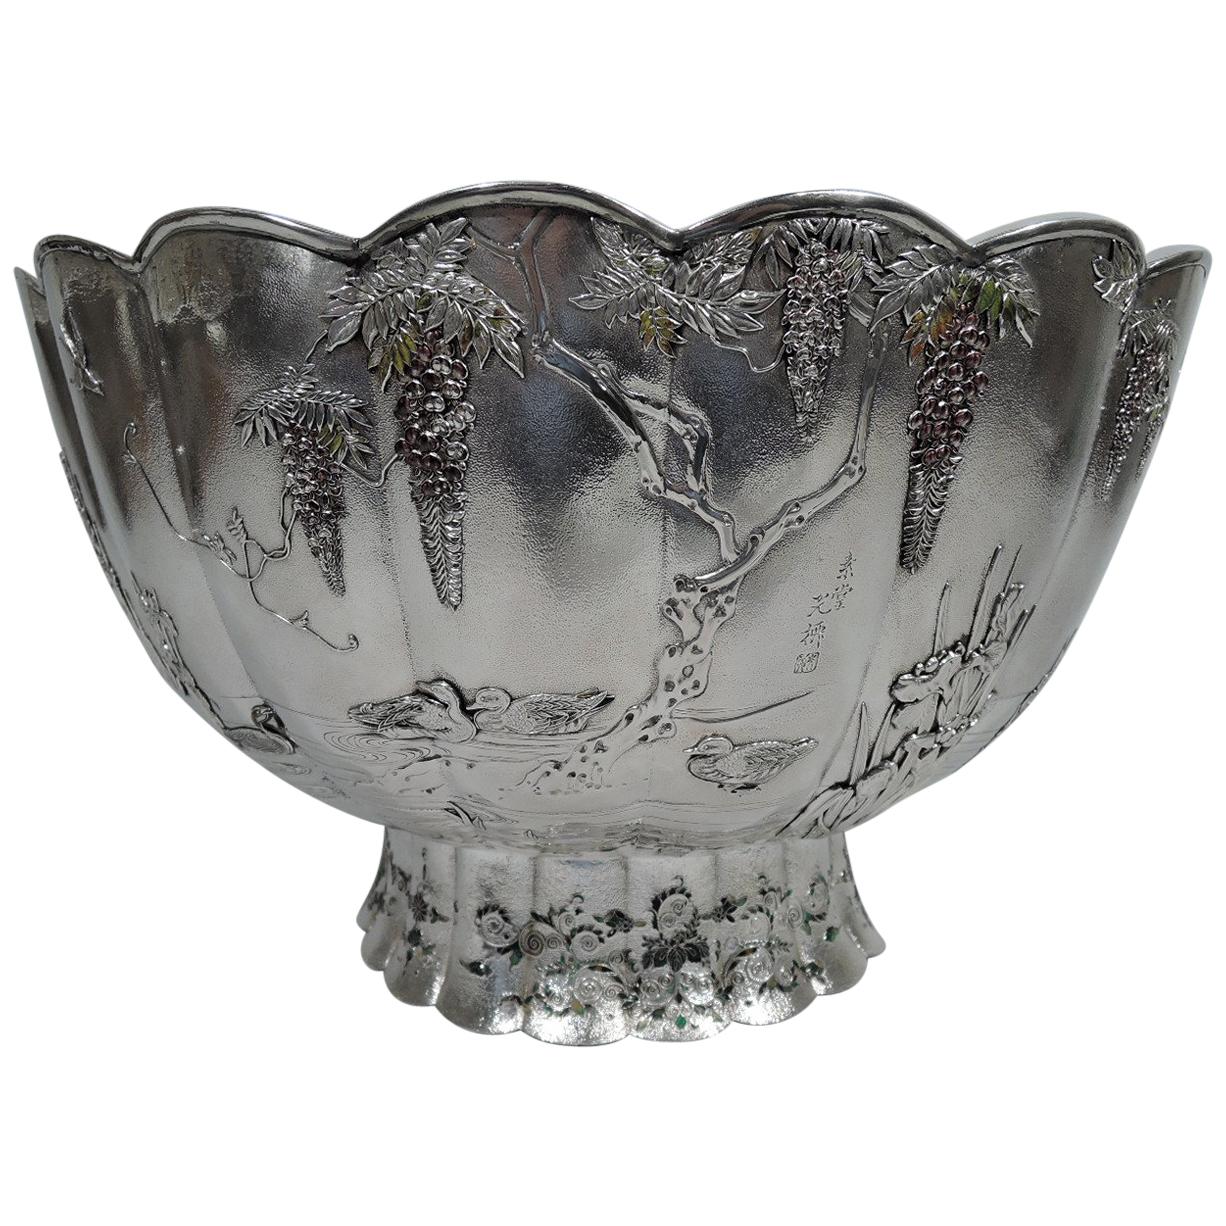 Antique Japanese Silver and Enamel Centerpiece Bowl wtih World's Fair Provenance